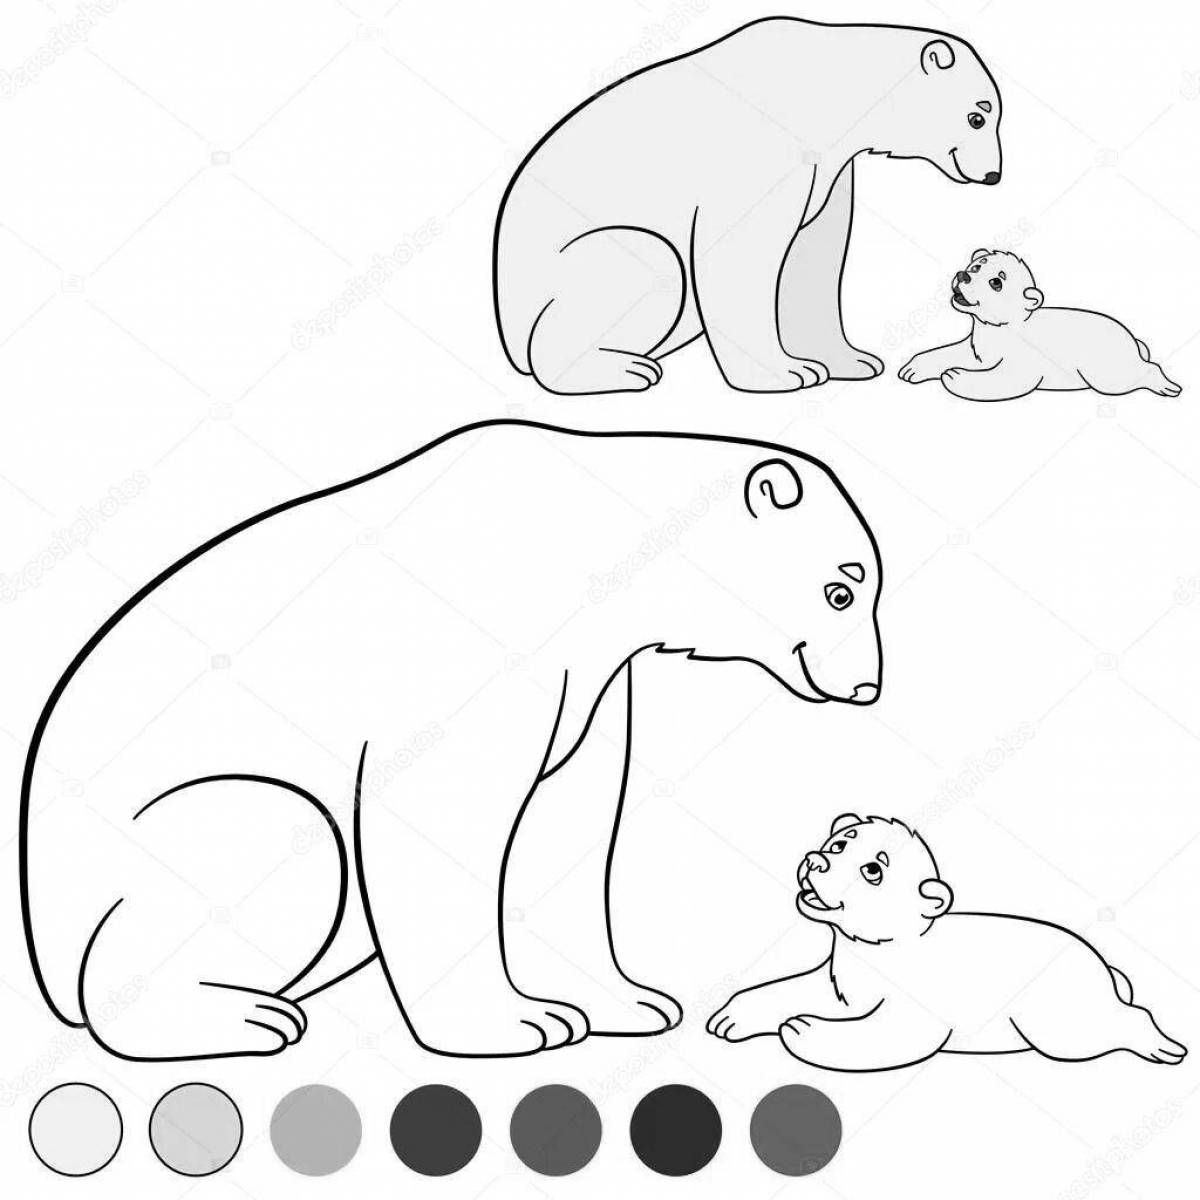 Cute umka and bear coloring book